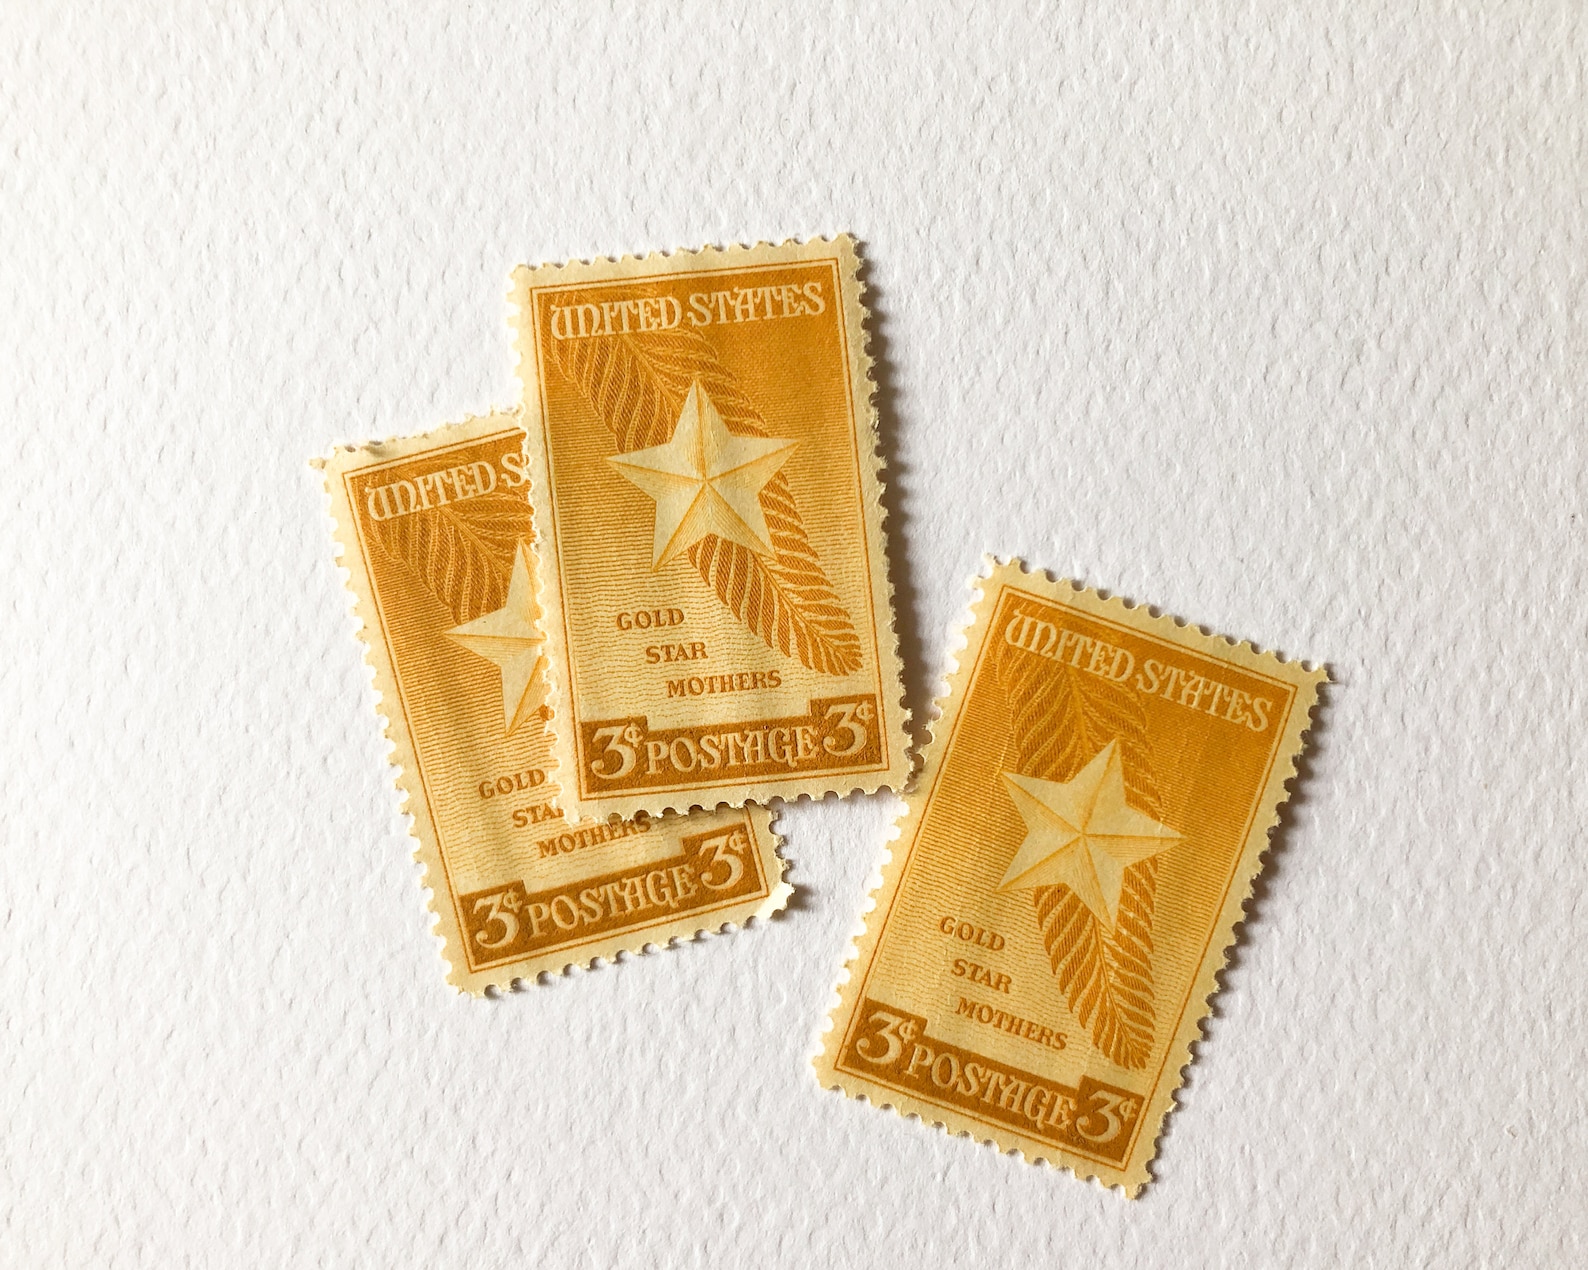 Gold Star Mother Stamps Unused Us Vintage Postage 3 Cents Etsy